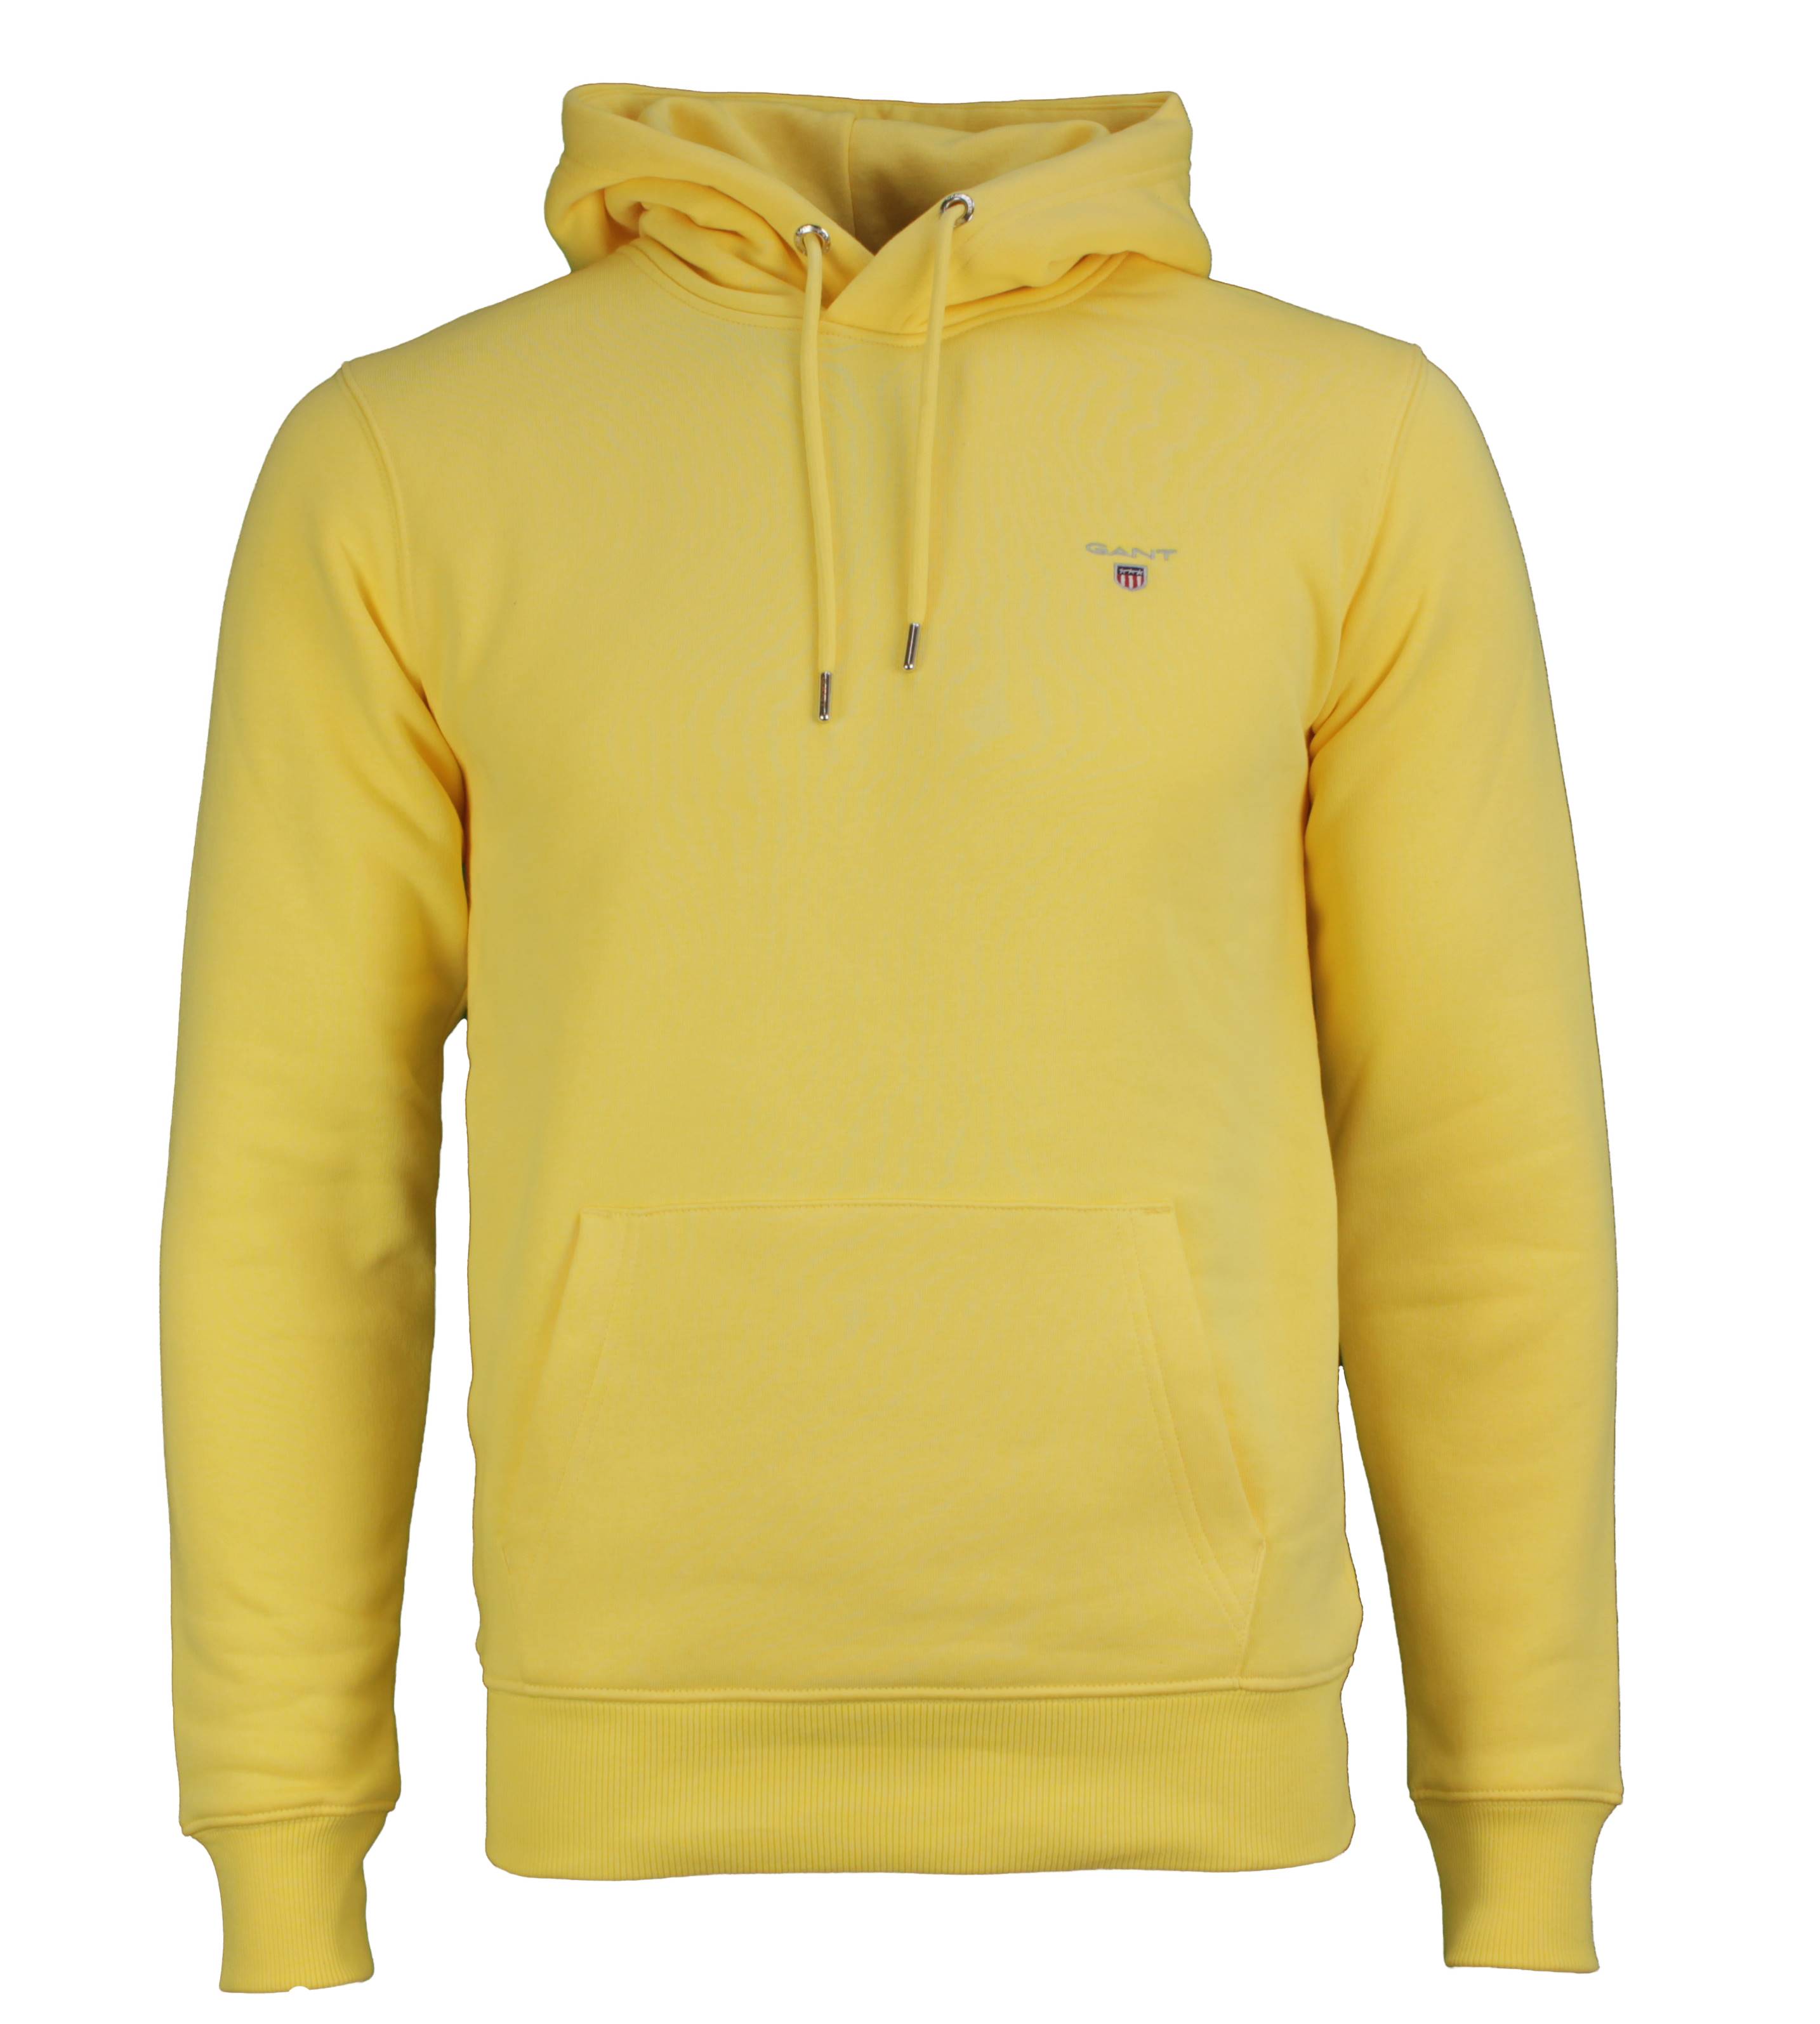 Gant Herren Kapuzen Pullover Original Sweat Hoodie gelb 2047017 714 banana yellow